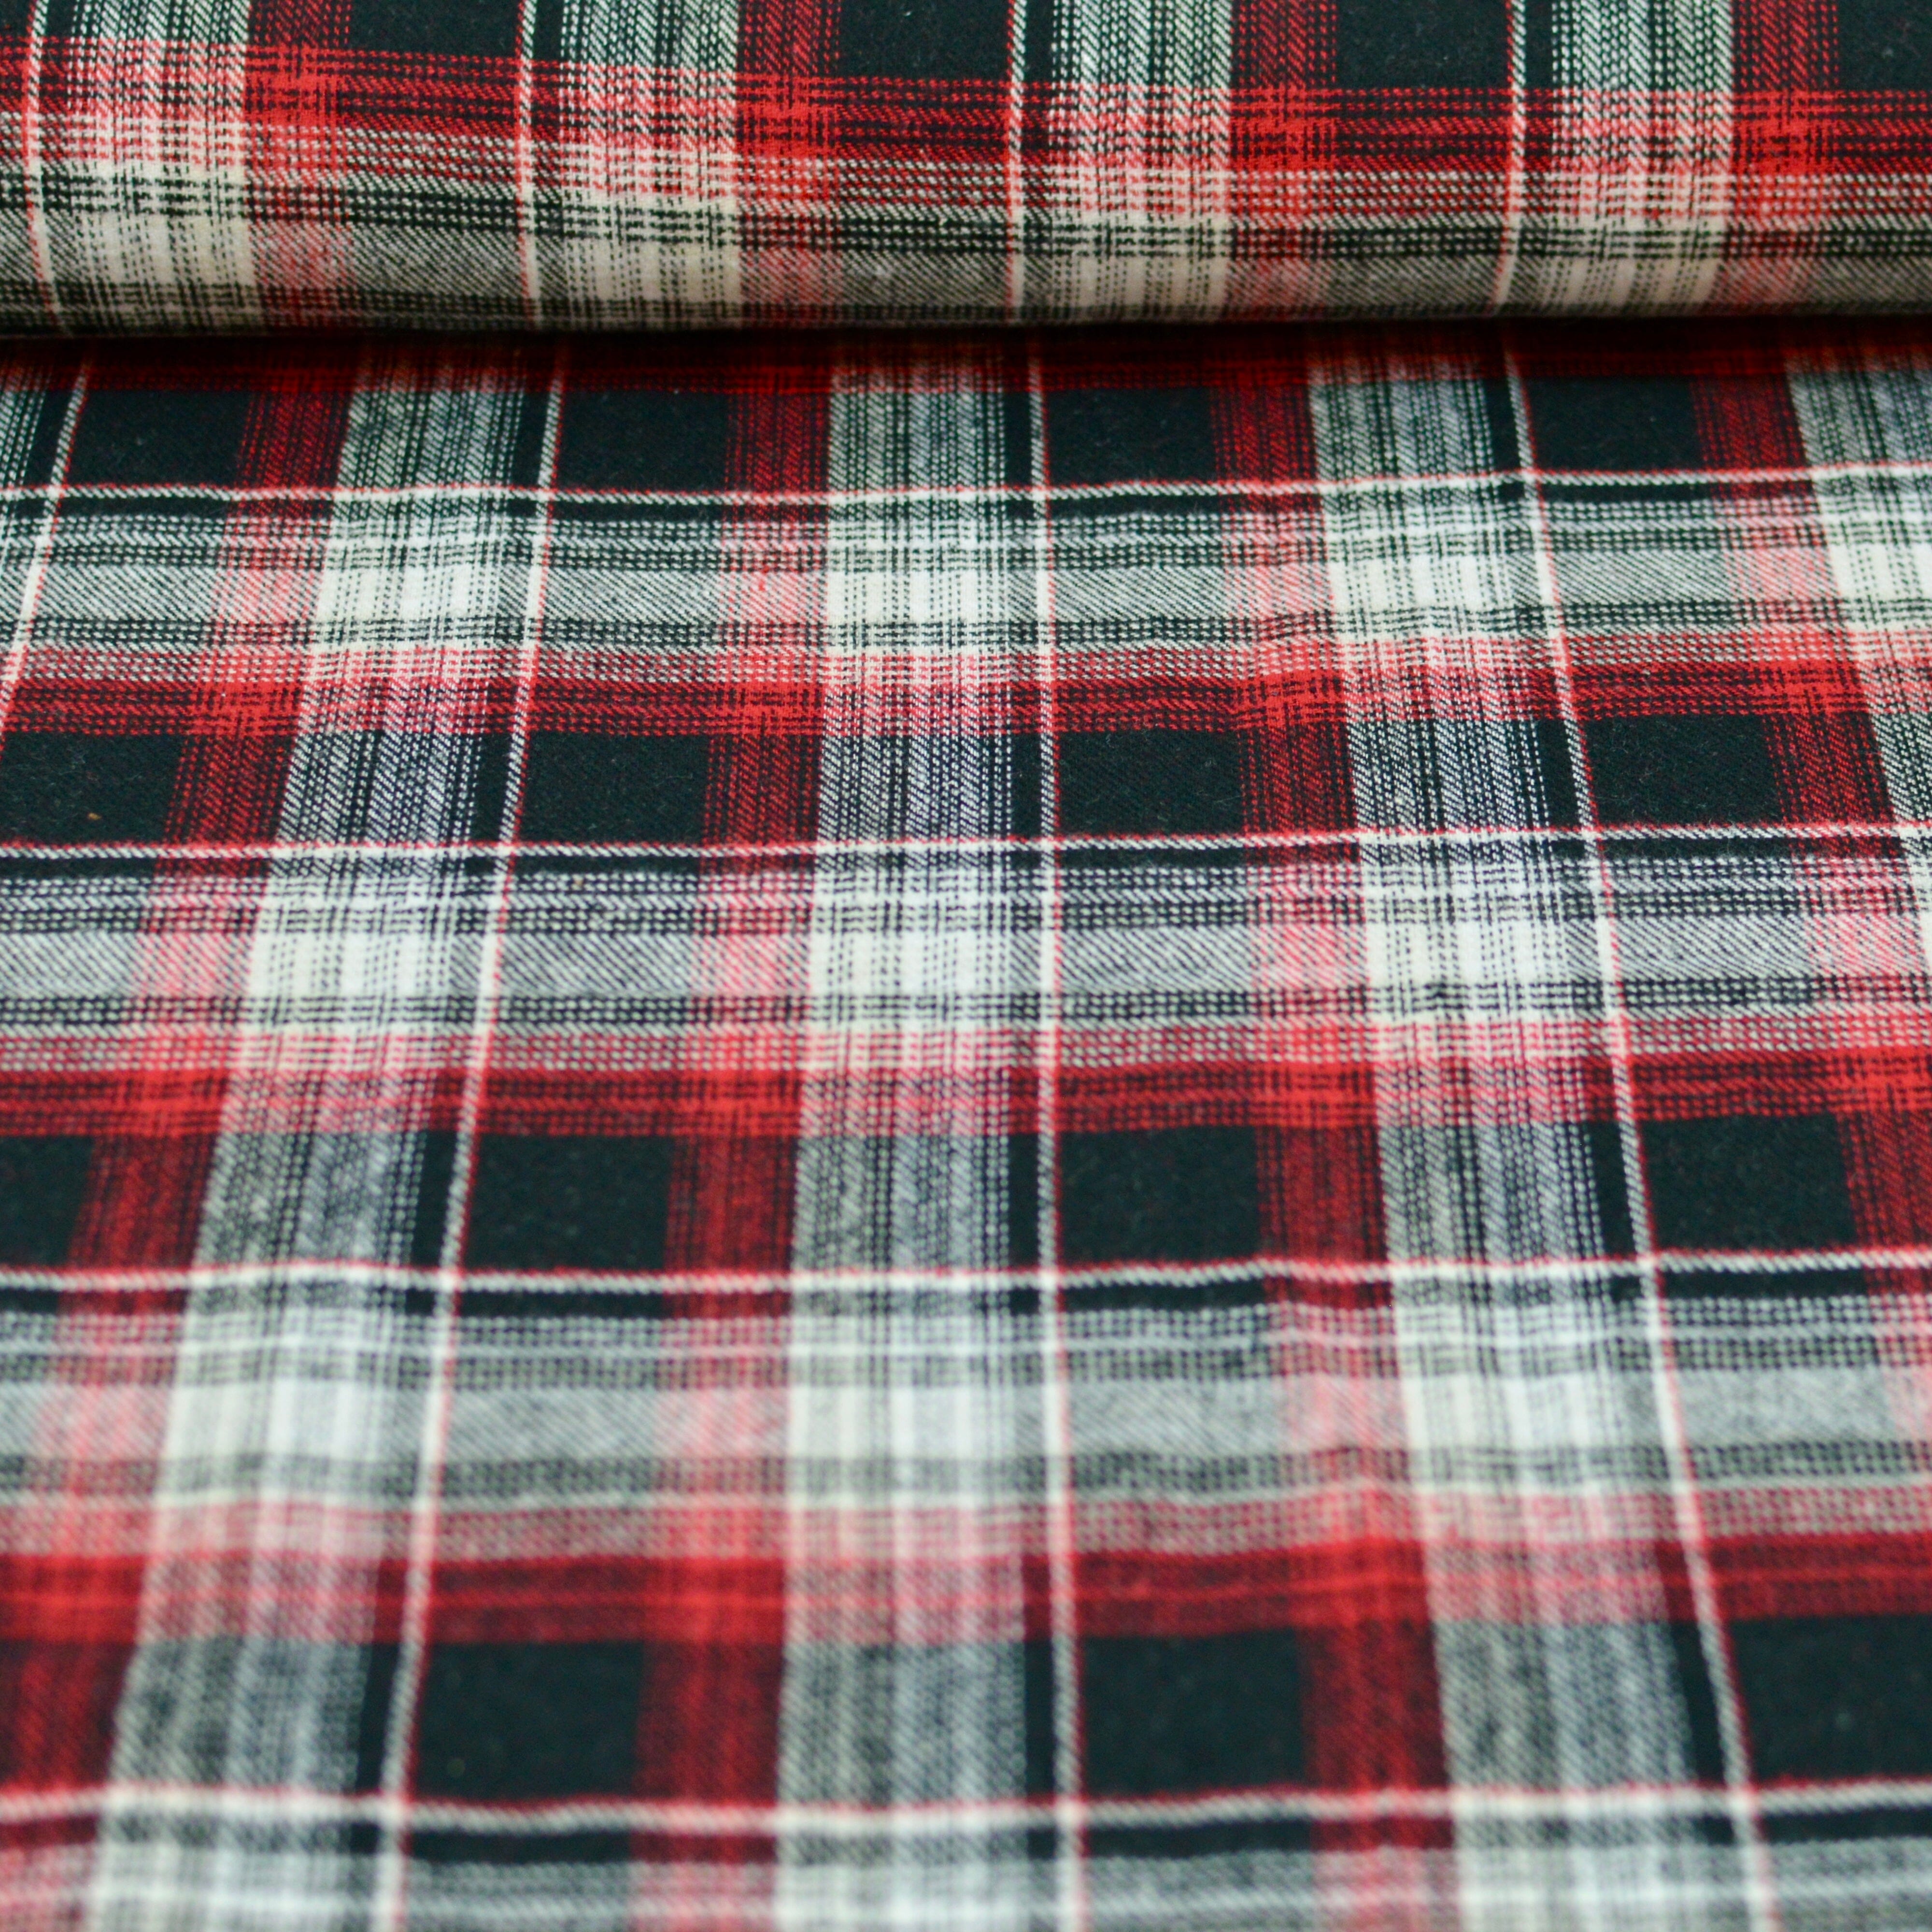 Baumwoll Flanell - rot schwarz kariert Fabric poshpinks